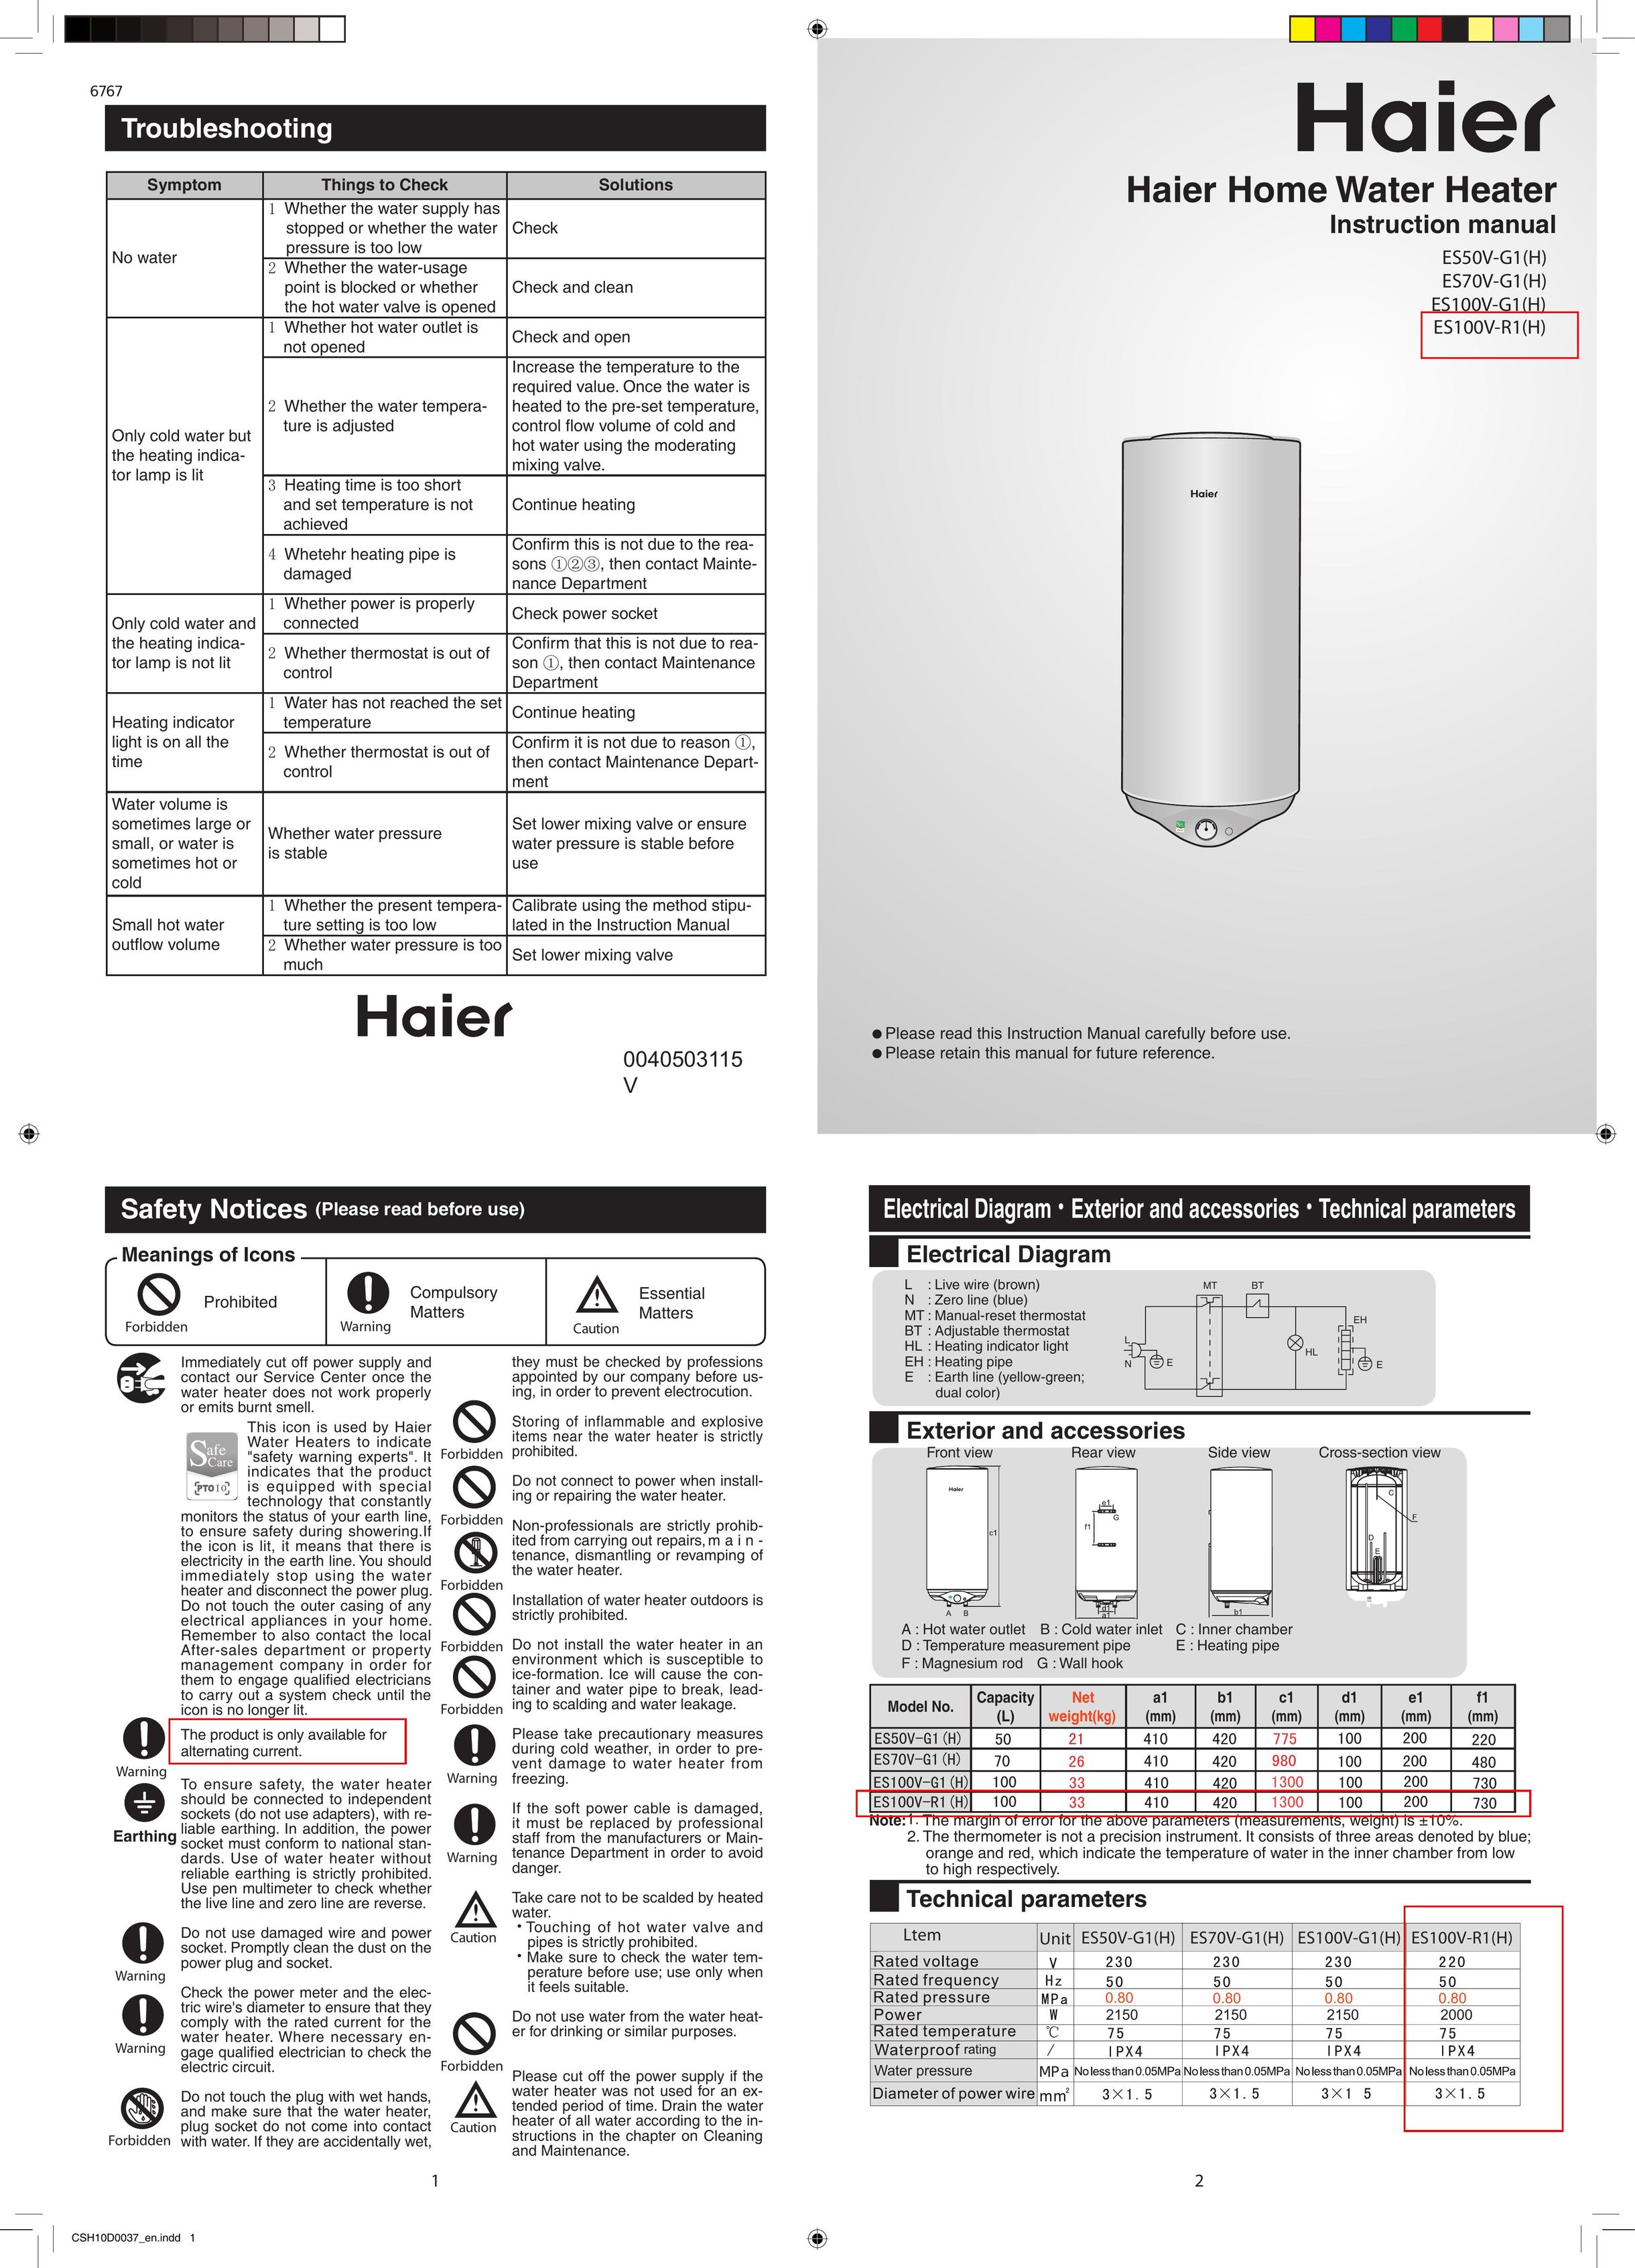 Haier ES70V-G1(H) Water Heater User Manual